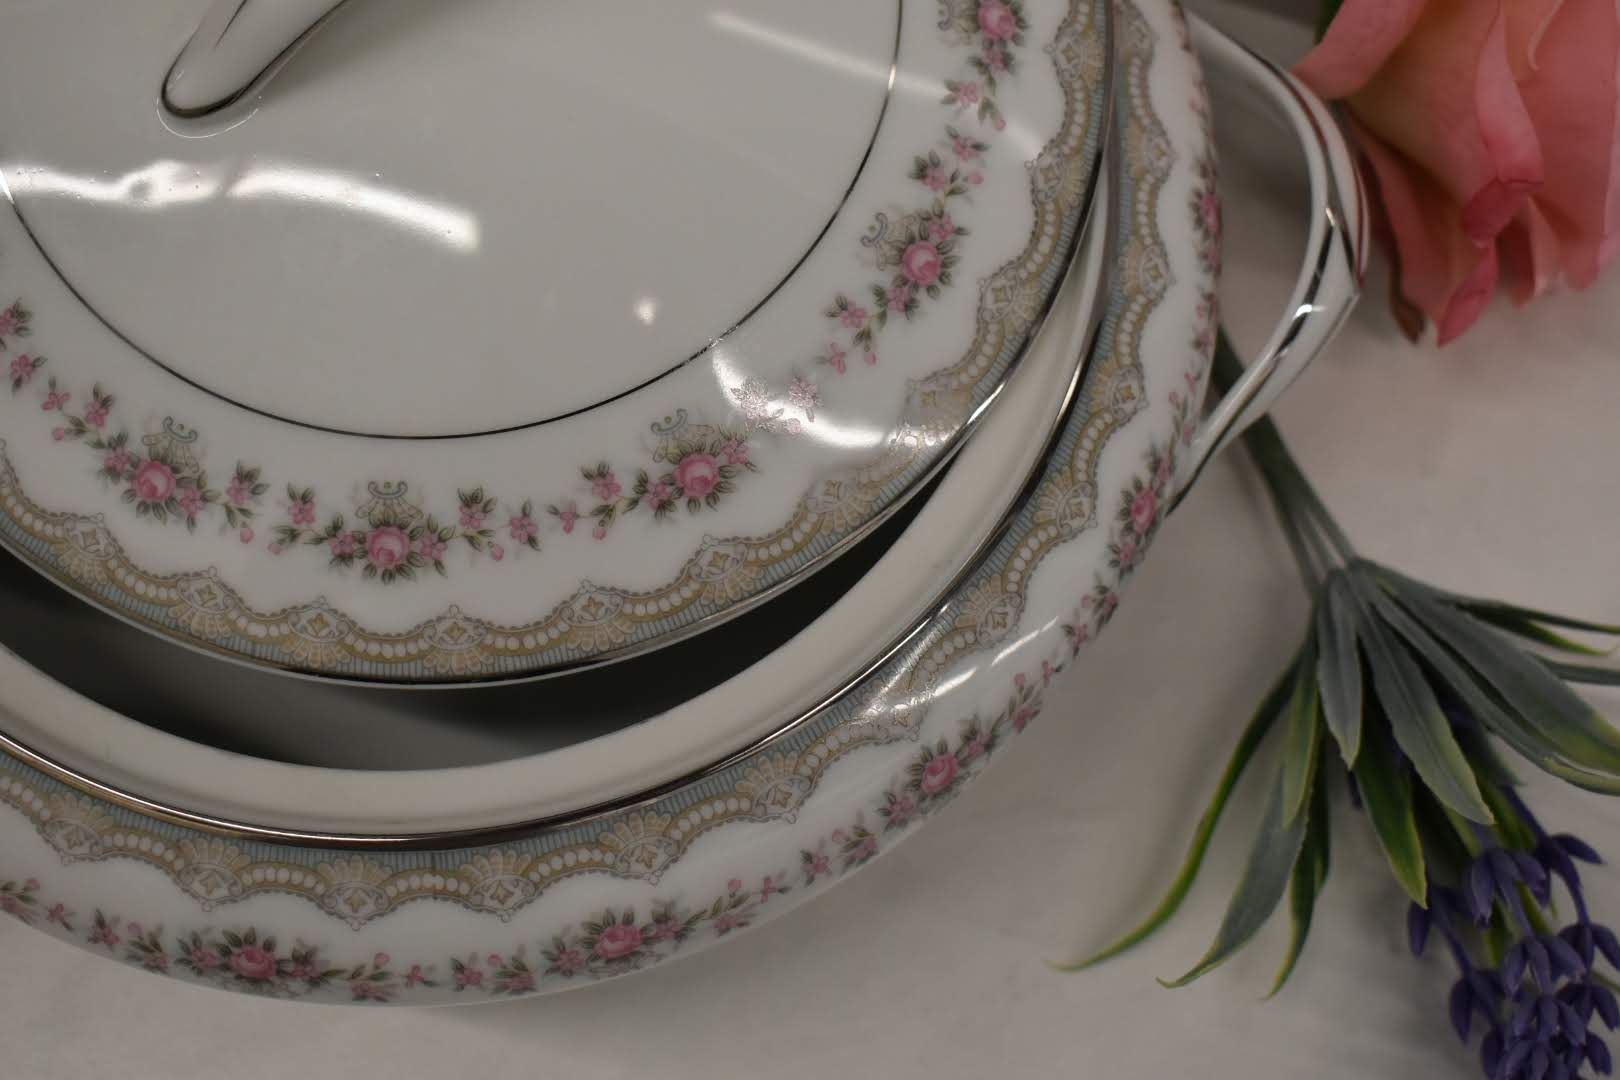 Noritake Glenwood - Fine Porcelain China - Platinum Rim - 5770 pattern - Round Vegetable Bowl with Lid